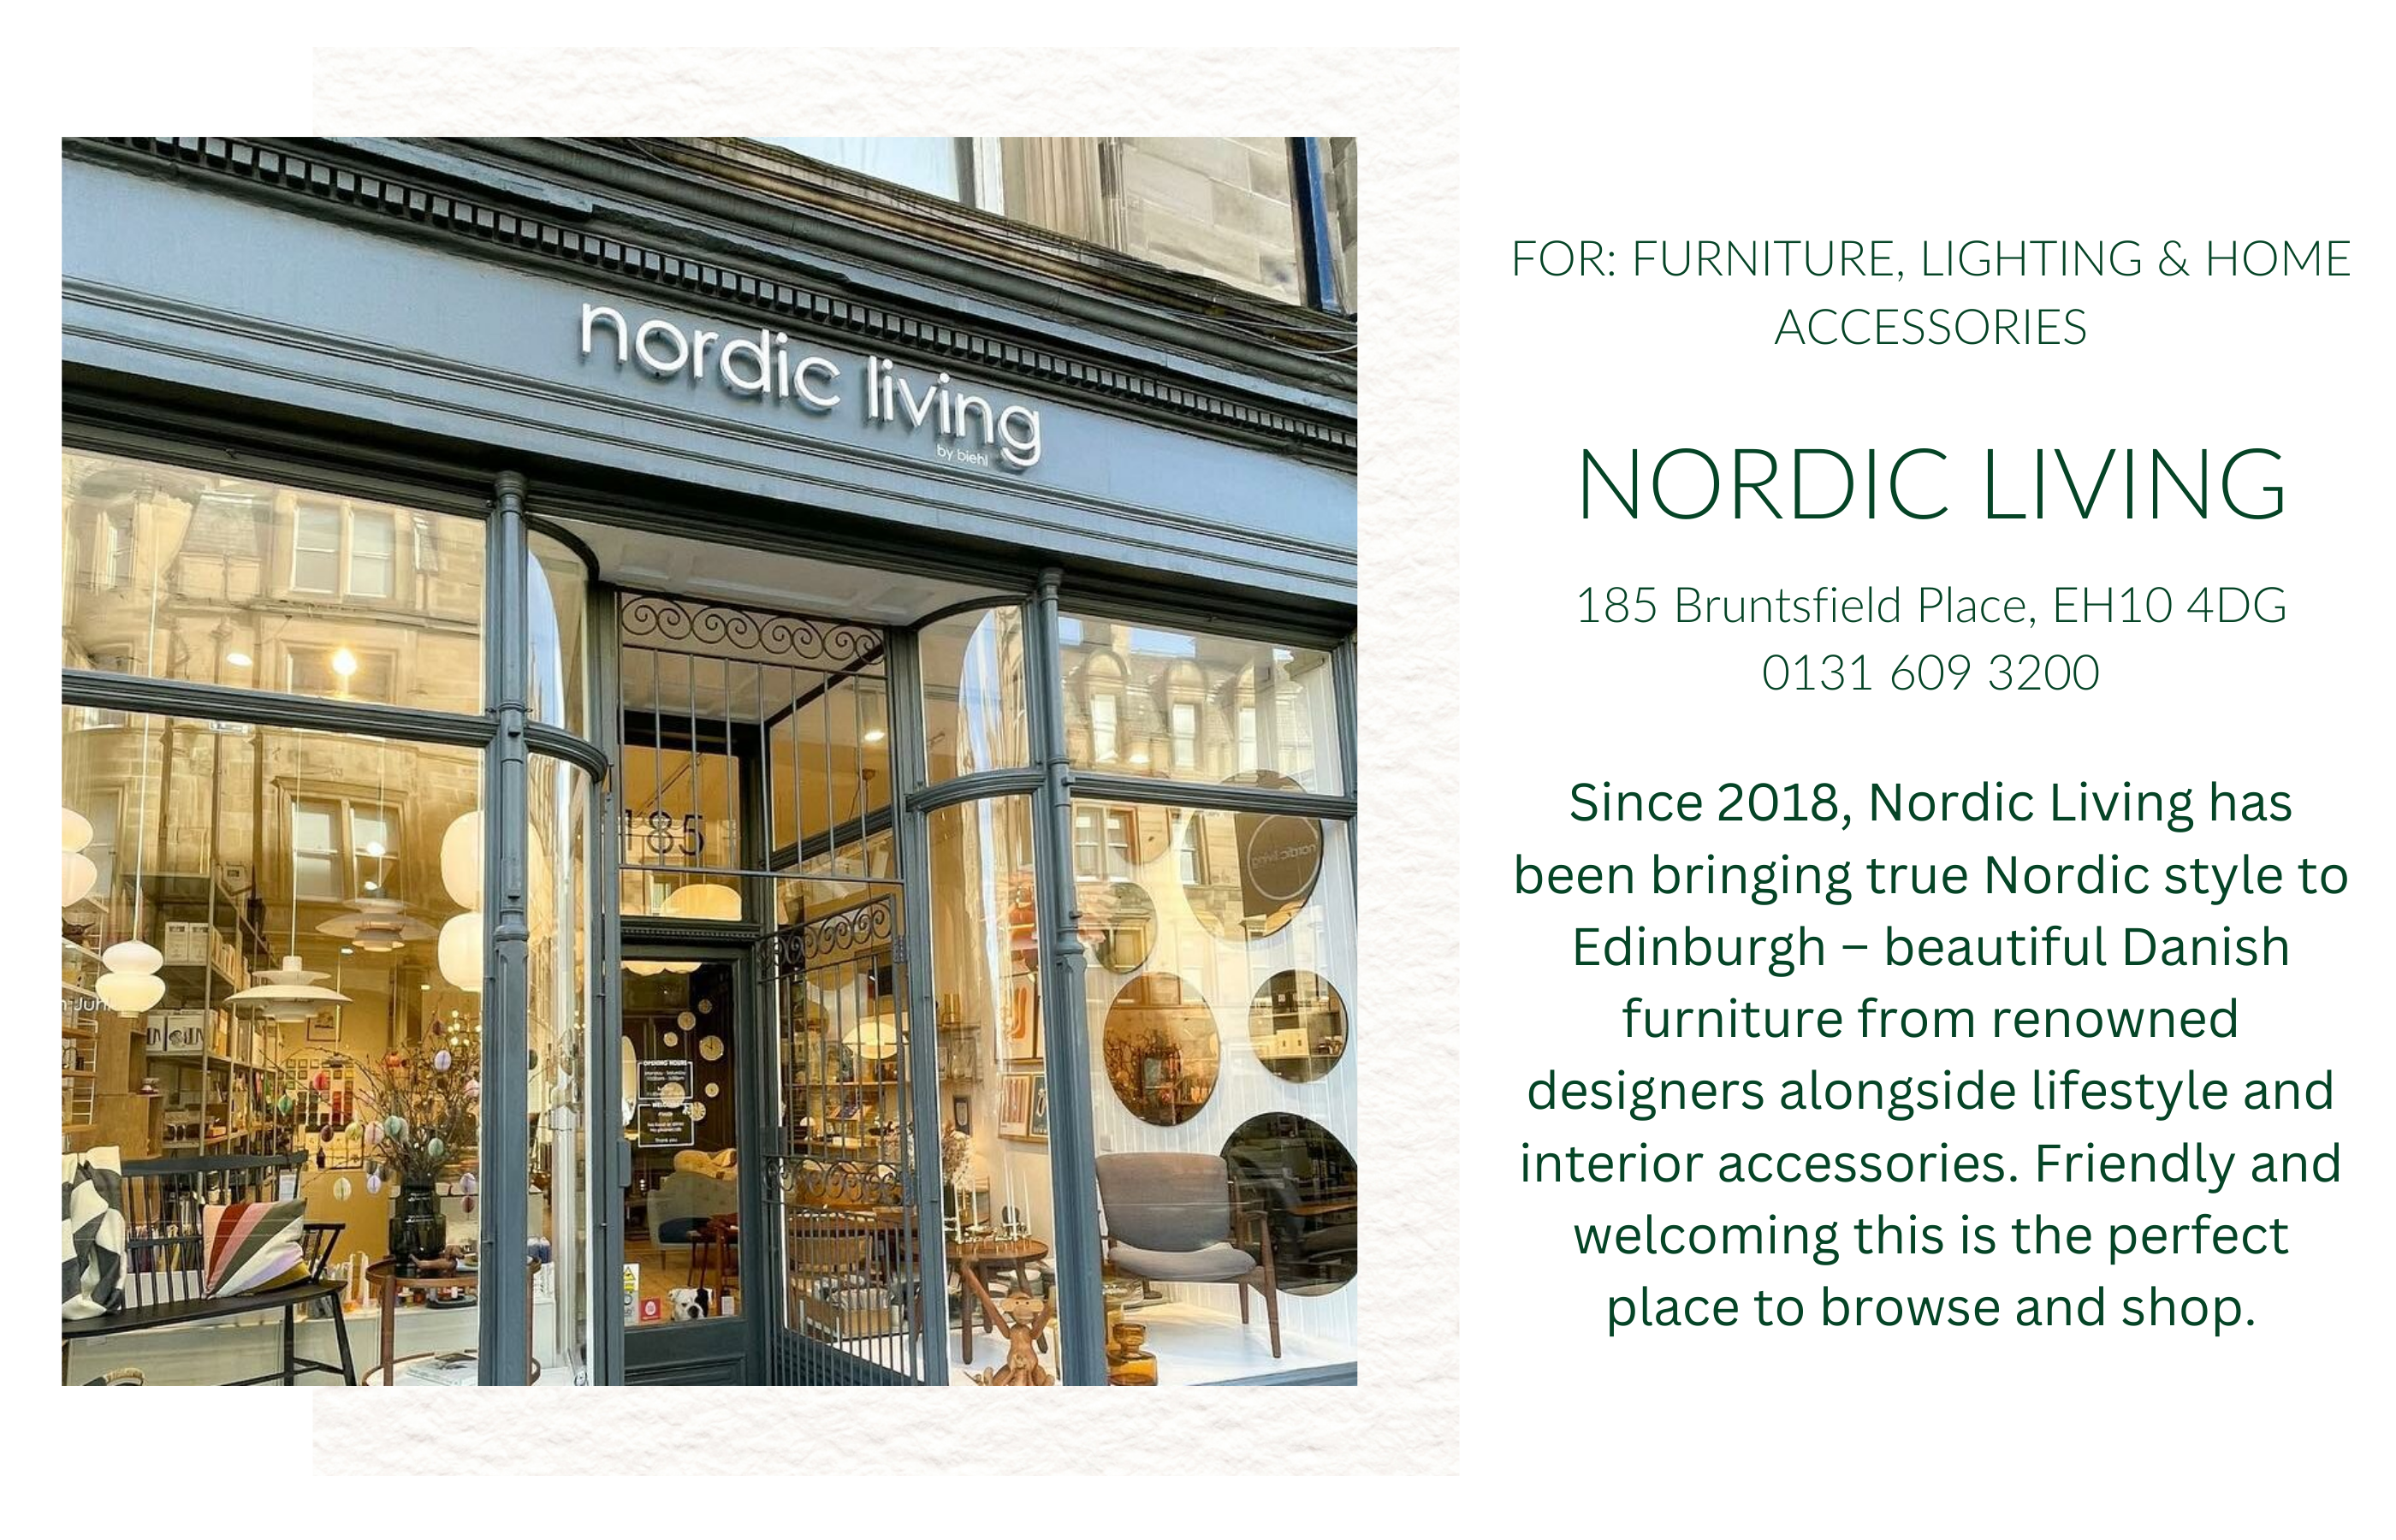 Image of Nordic Loving interiors store, Bruntsfield